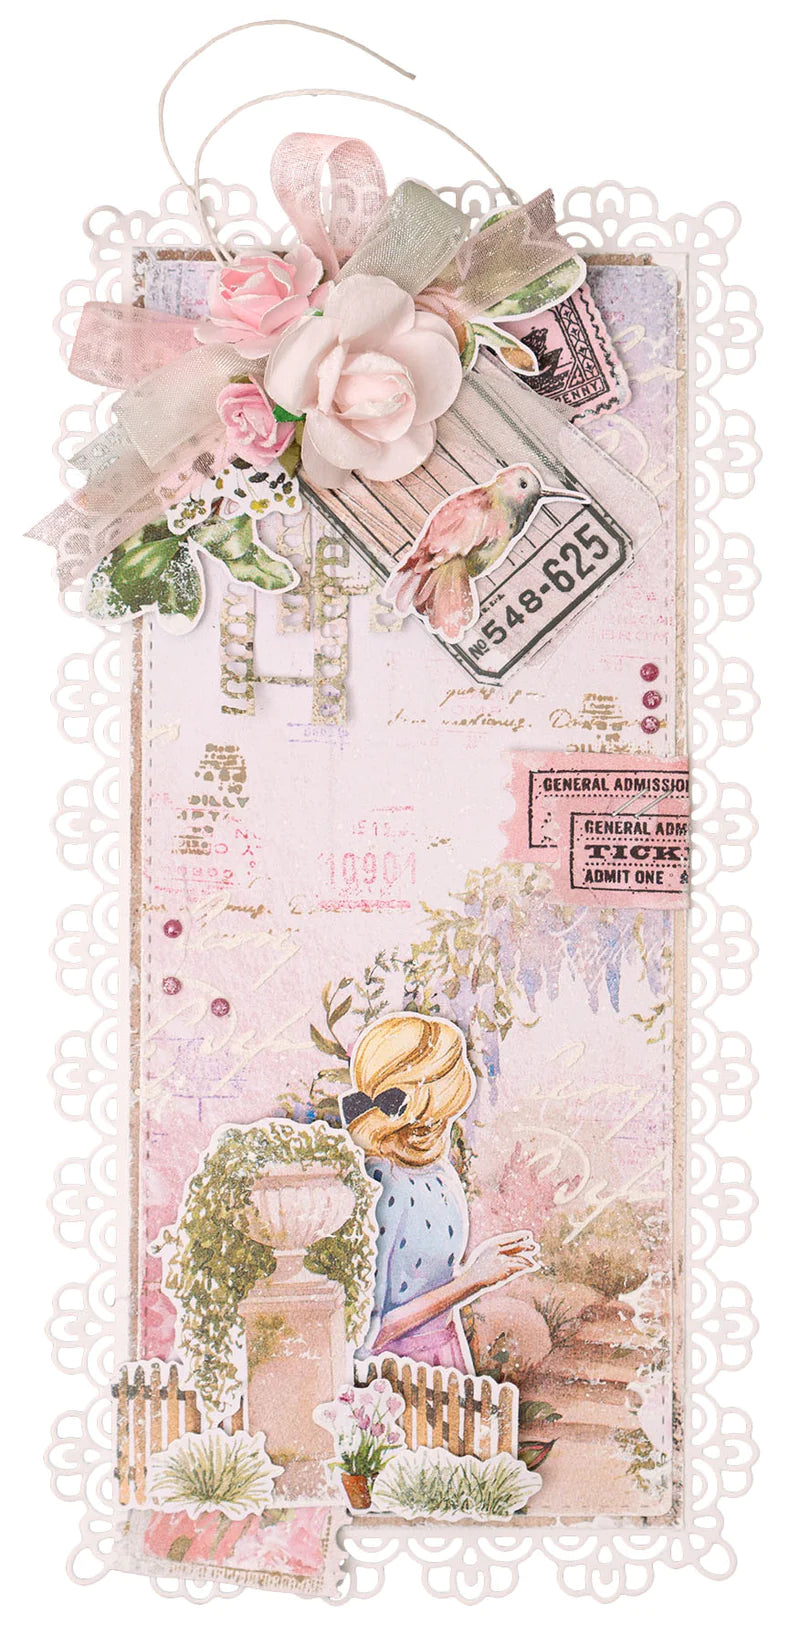 Stamp & Cutting Die - Postage Stamps - Romantic Moments - Jenine's Mindful Art - Studio Light